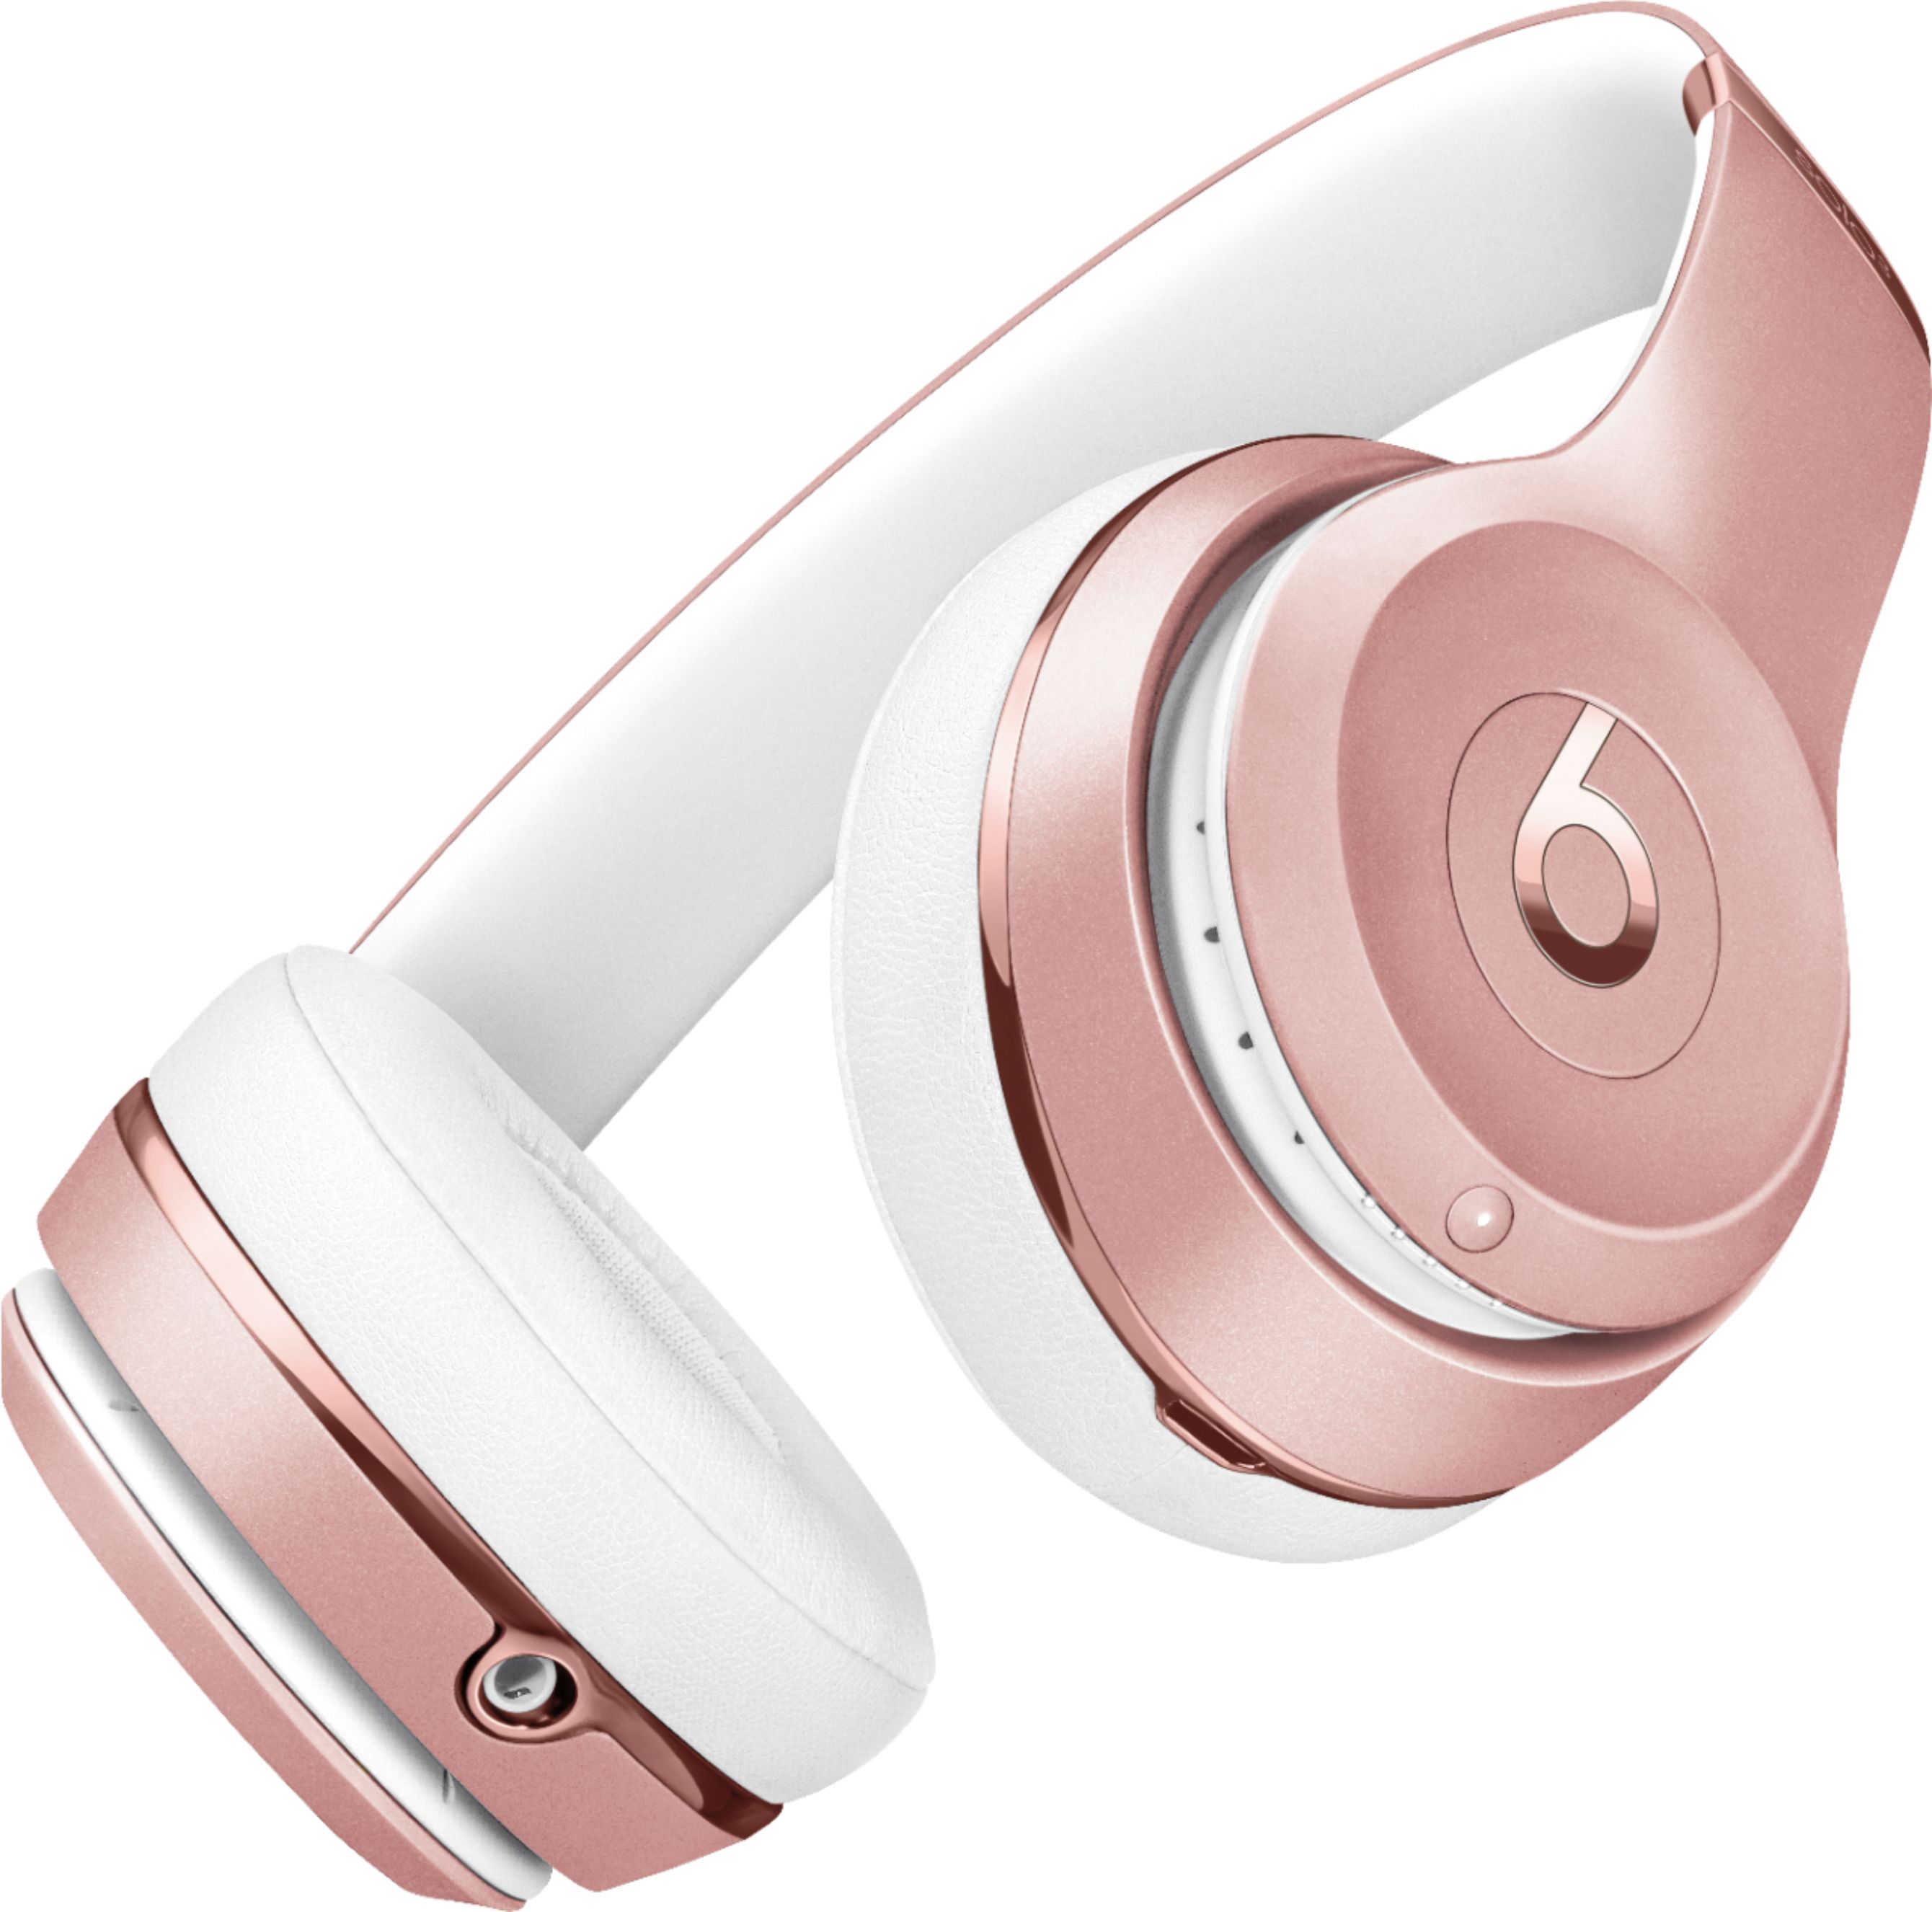 Beats by Dr. Dre Solo³ Wireless On-Ear Headphones Rose Gold MX442LL/A  Best Buy